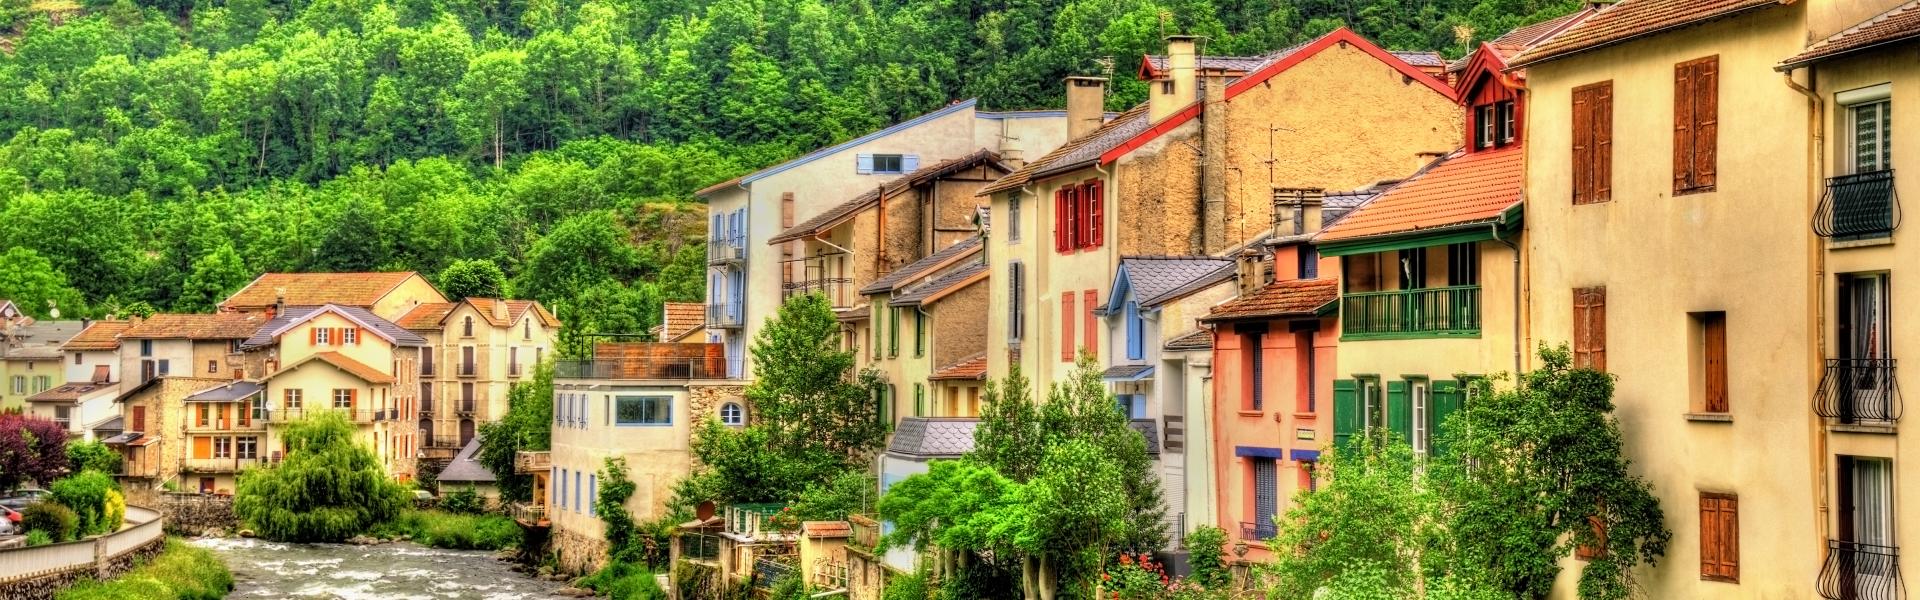 Locations de vacances et gîtes en Ariège - HomeToGo